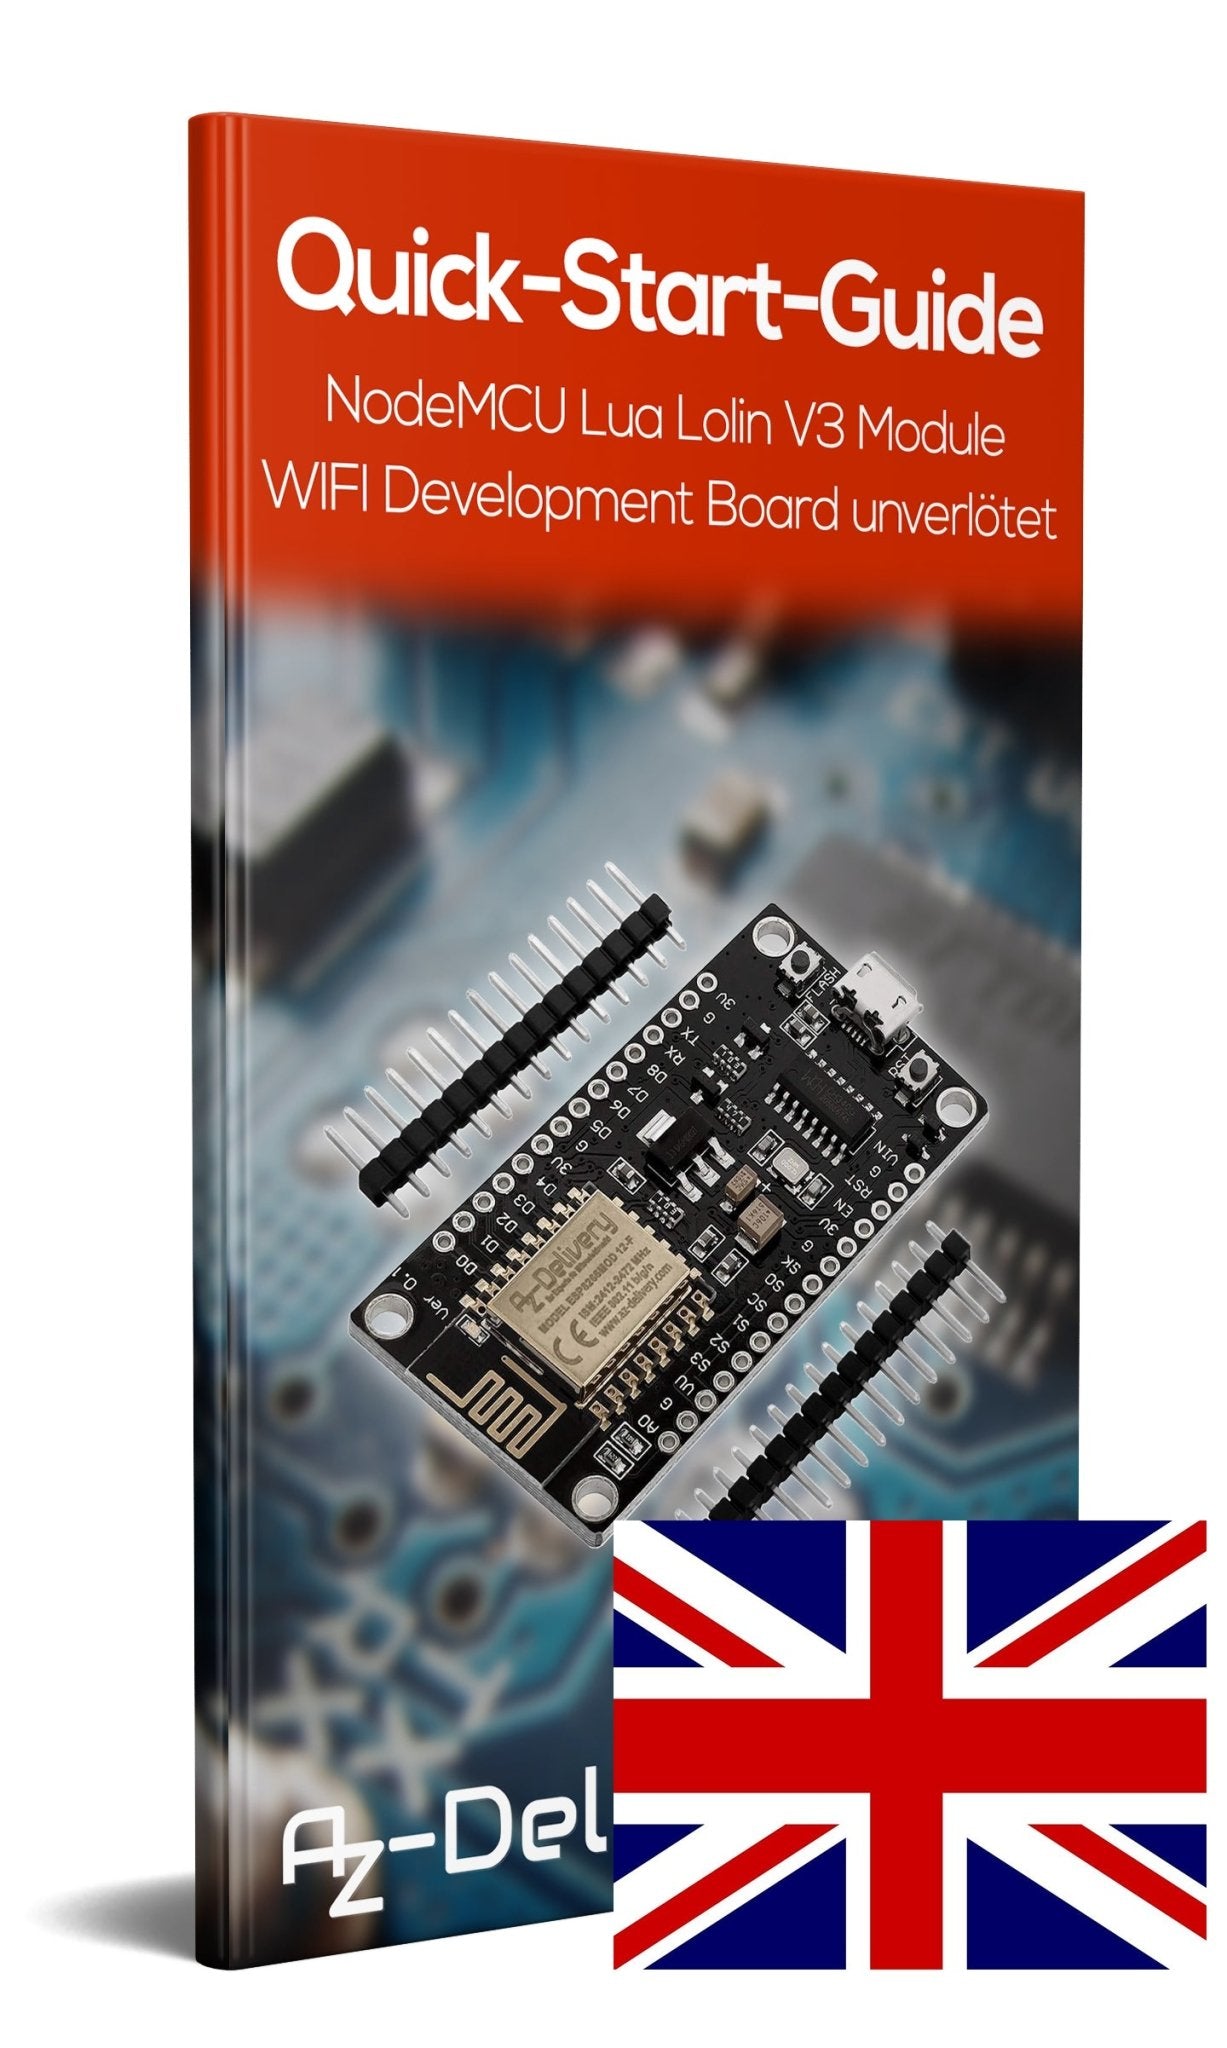 NodeMCU Lua Lolin V3 Module ESP8266 ESP-12F WIFI Development Board unverlötet - AZ-Delivery